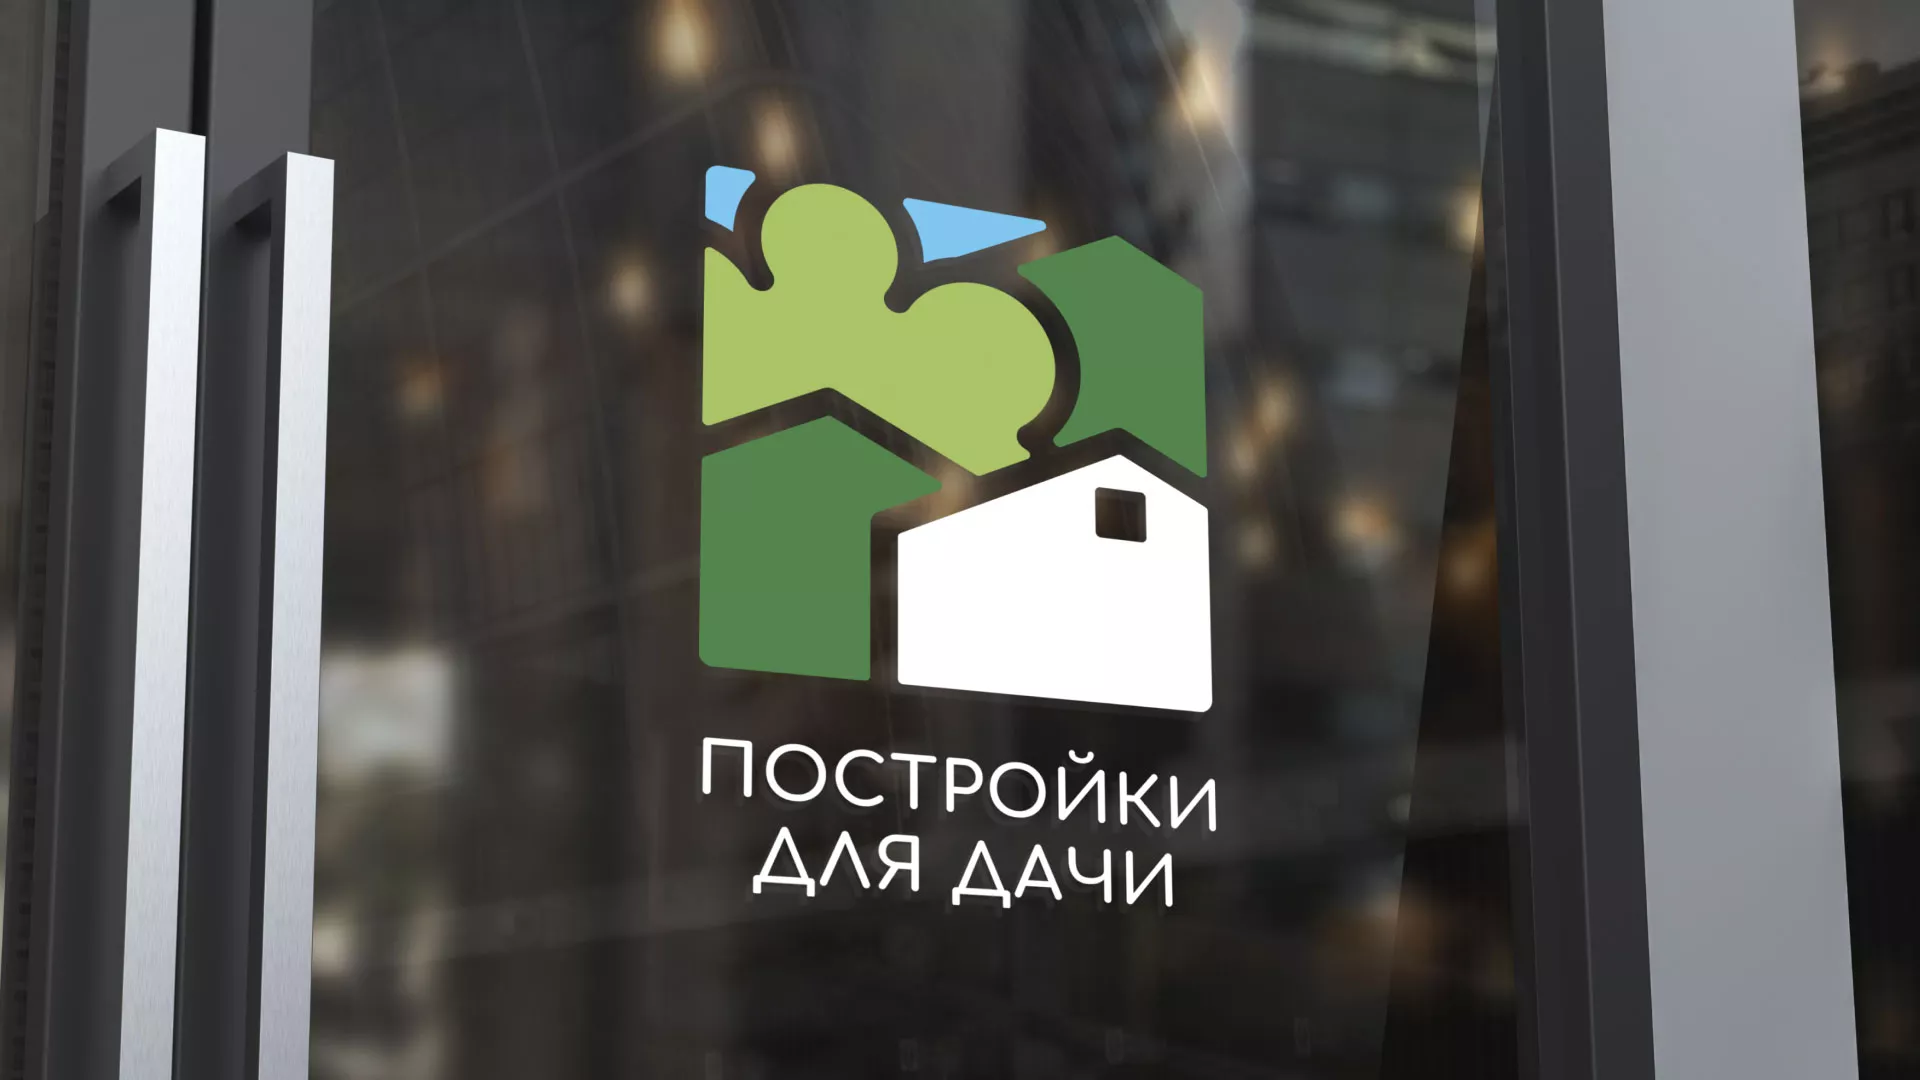 Разработка логотипа в Люберцах для компании «Постройки для дачи»